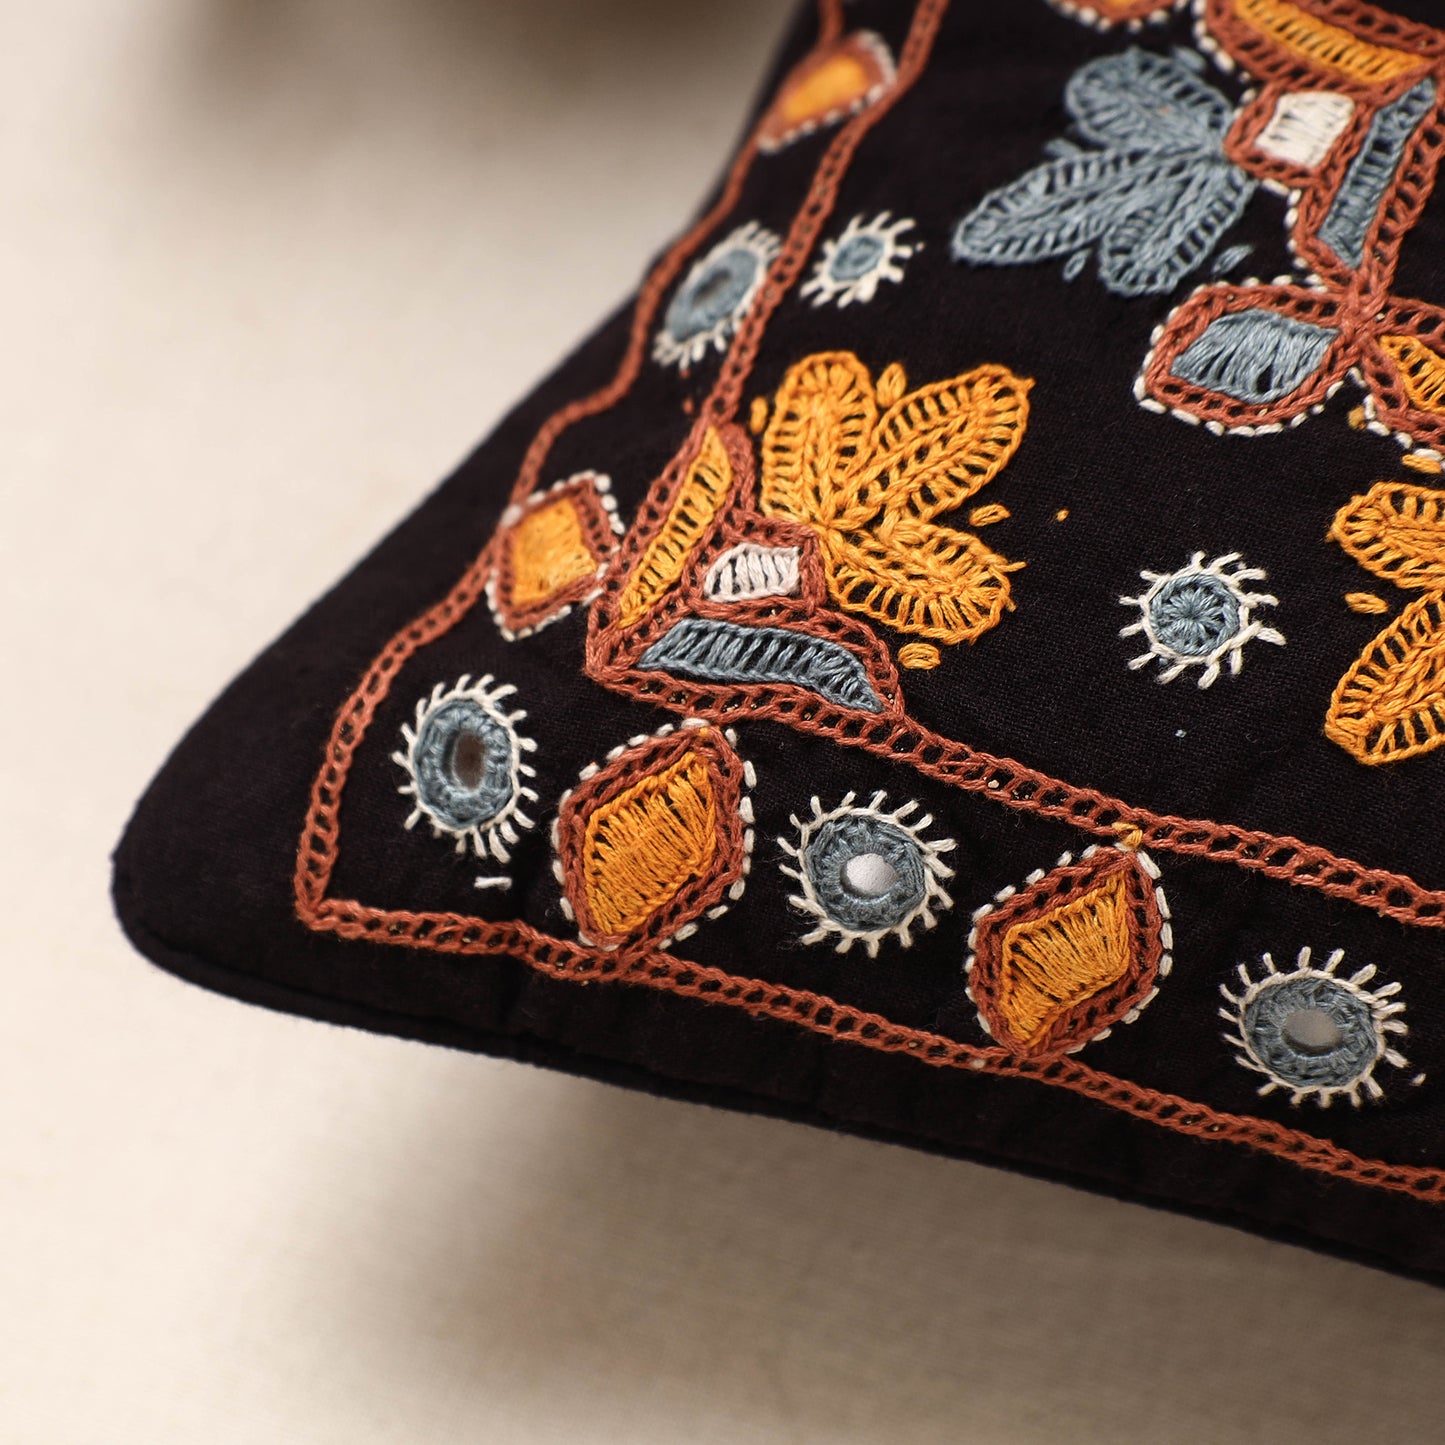 Kala Raksha Pakko Hand Embroidery Cotton Cushion Cover (12 x 12 in)